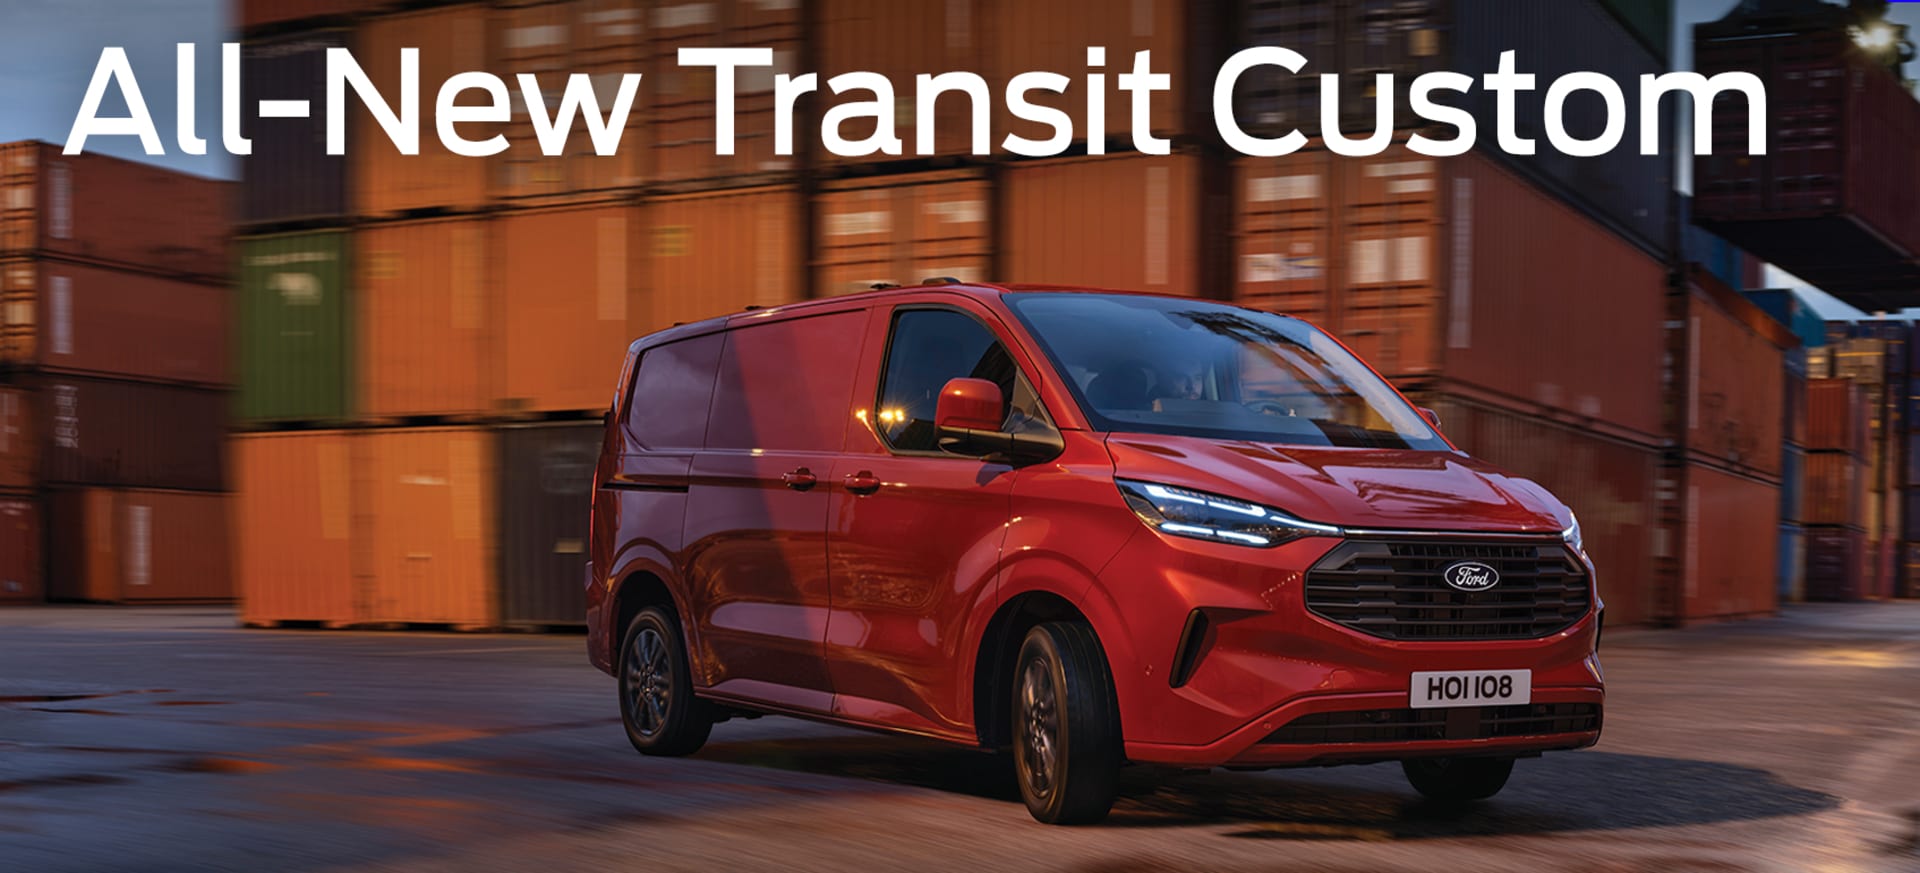 all-new ford transit custom